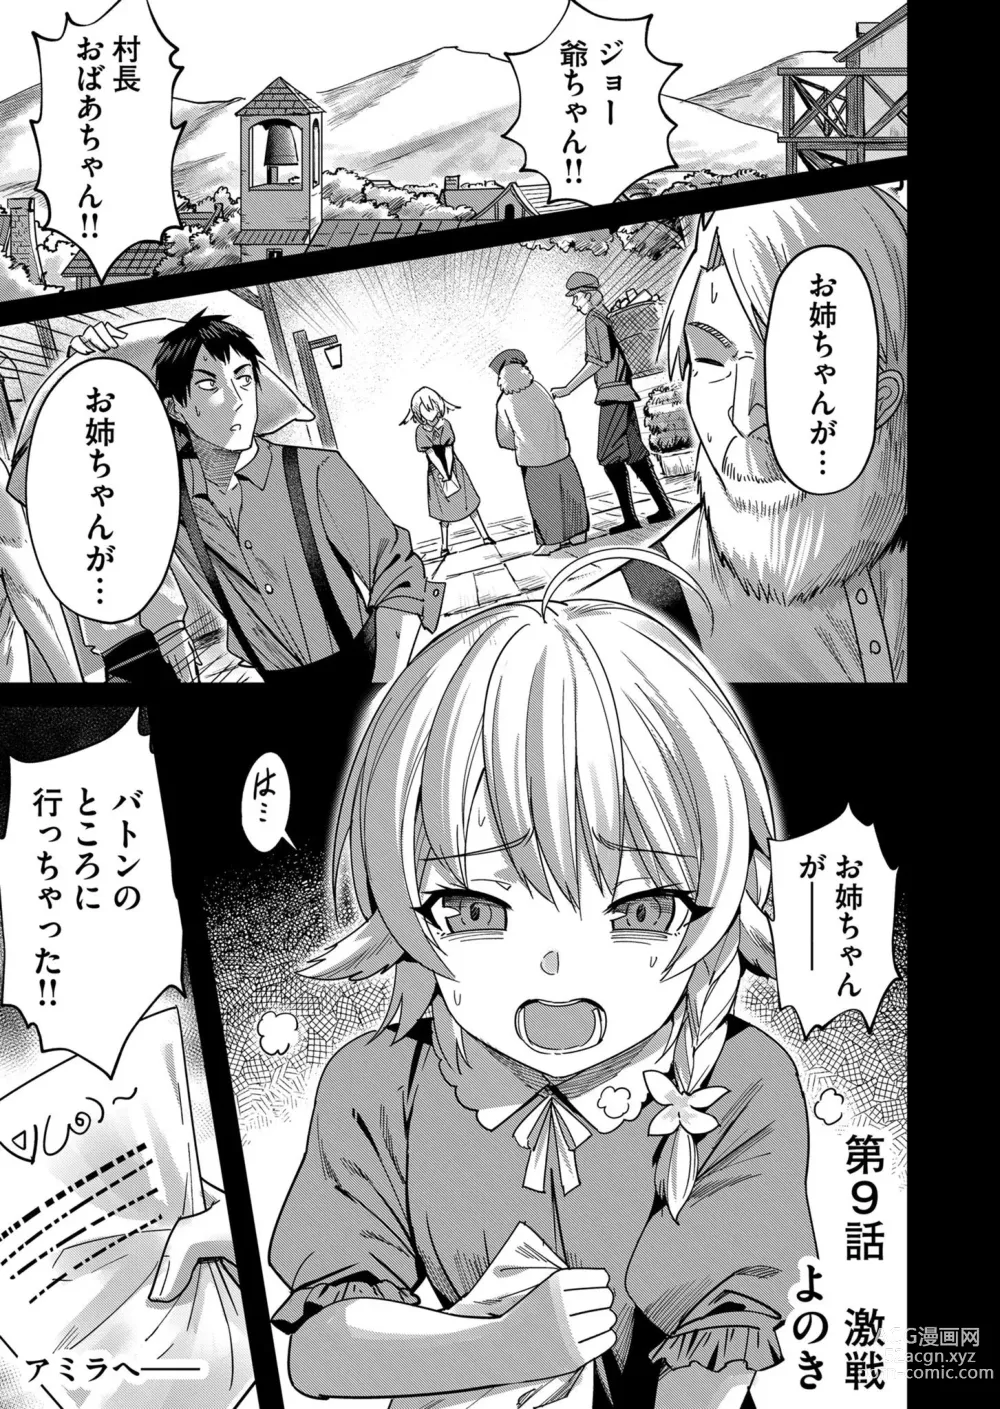 Page 5 of manga Kichiku Eiyuu Vol.02